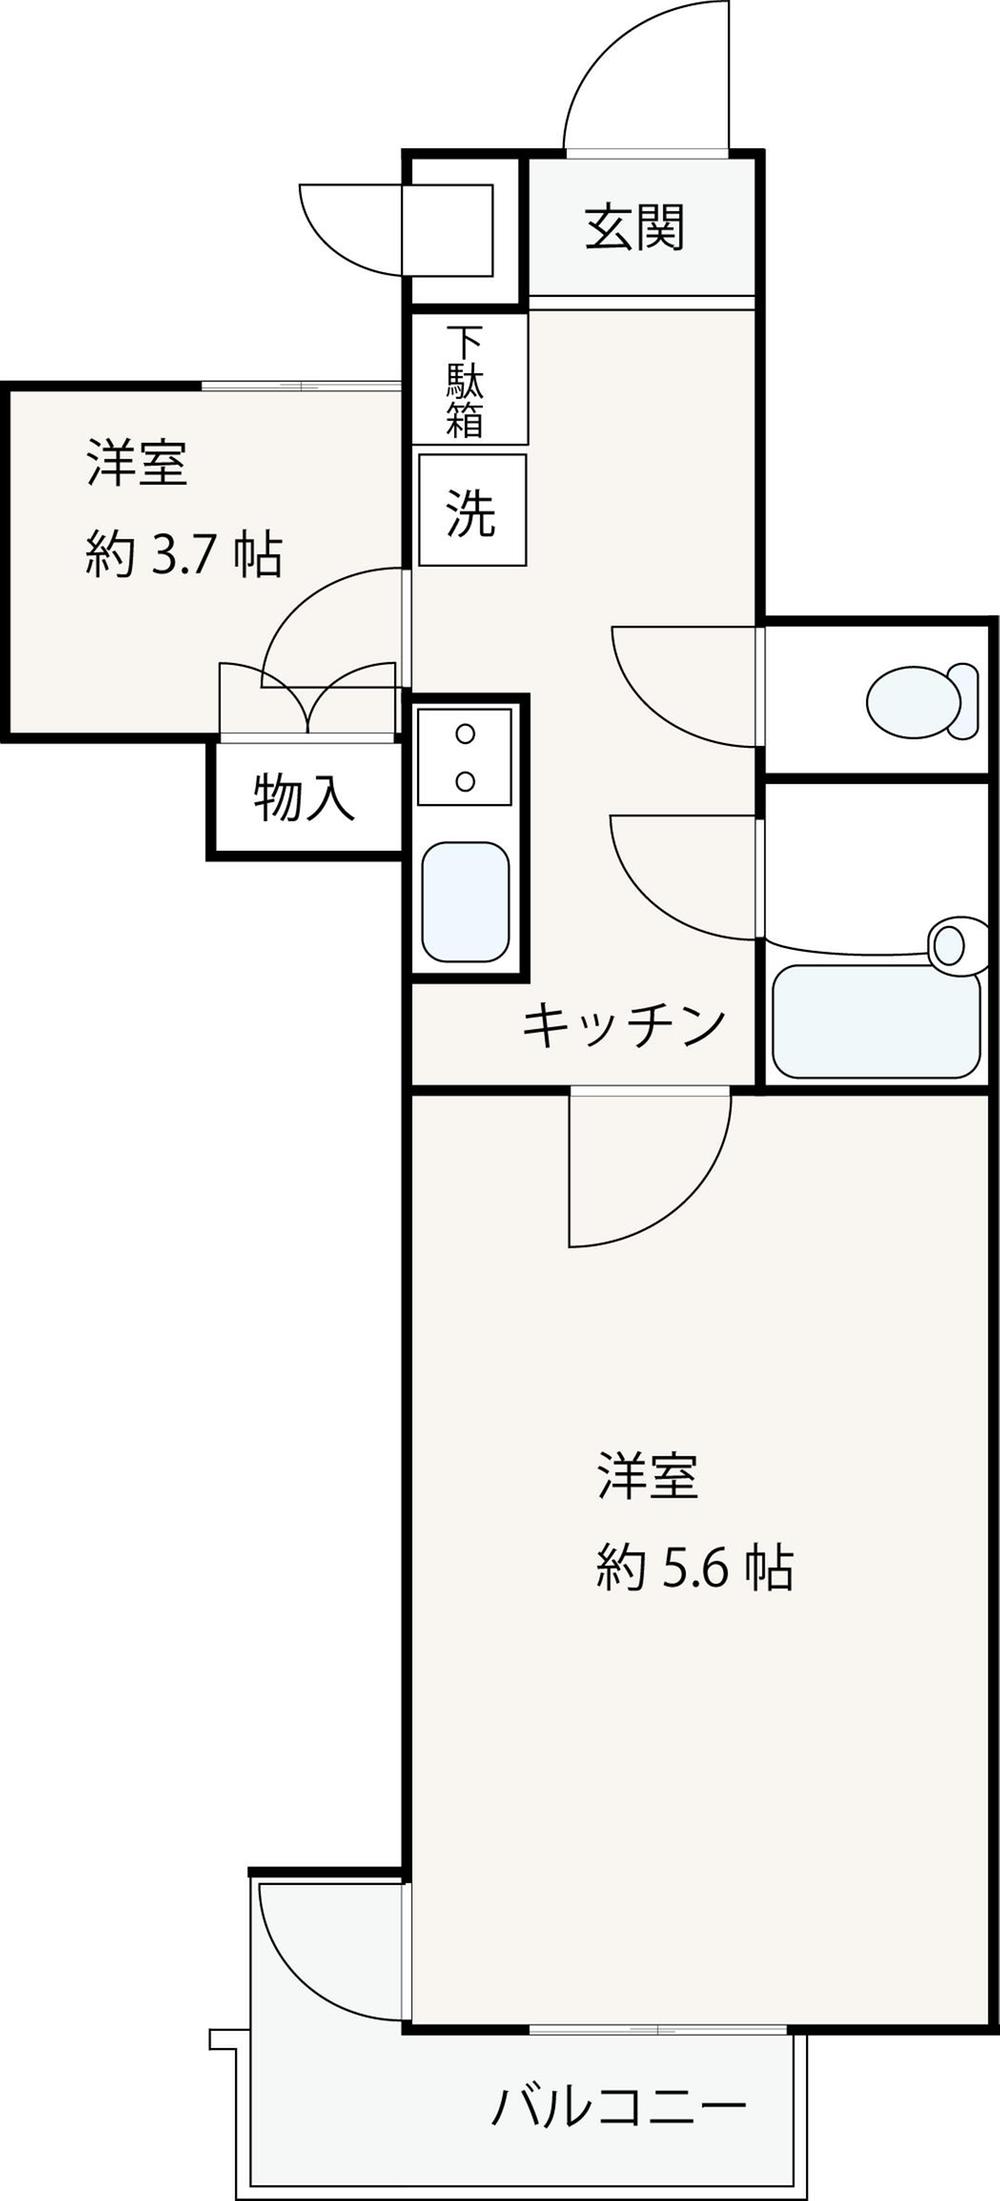 Floor plan. 2K, Price 9.8 million yen, Occupied area 26.94 sq m , Balcony area 3 sq m